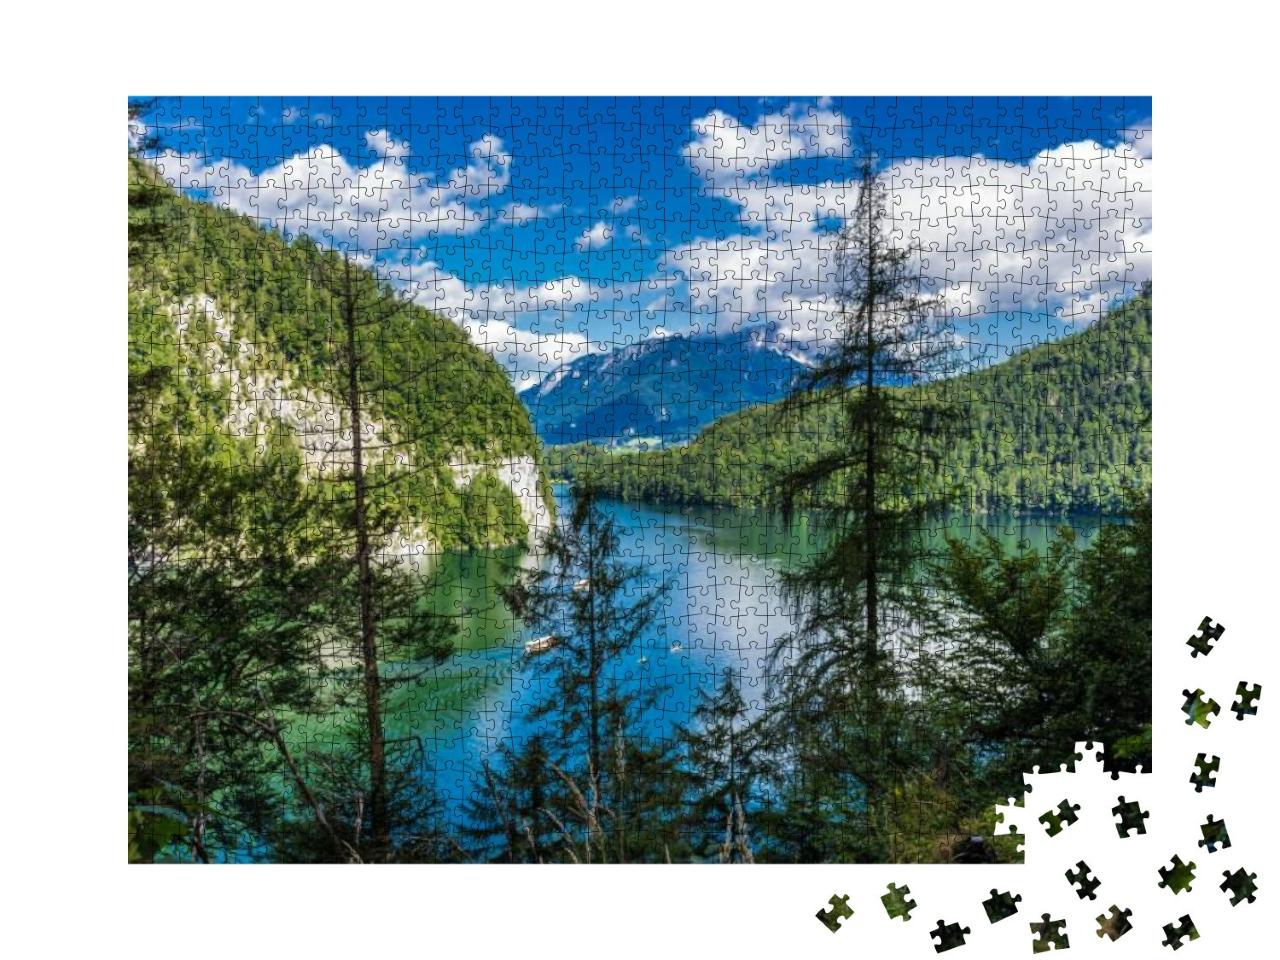 Konigssee Idyllic Alpine Lake in Berchtesgaden, Bavaria... Jigsaw Puzzle with 1000 pieces